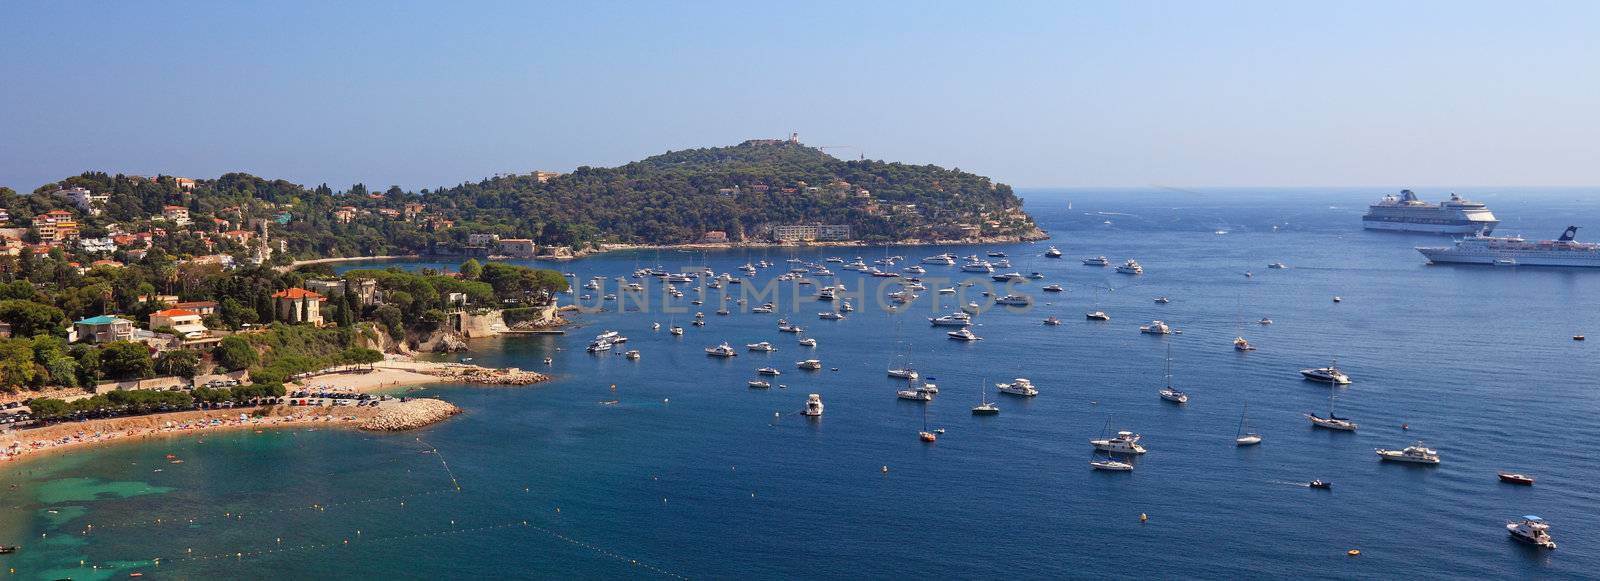 Panoramic view of bay near Nice city. Many sail boats, cruise ships.